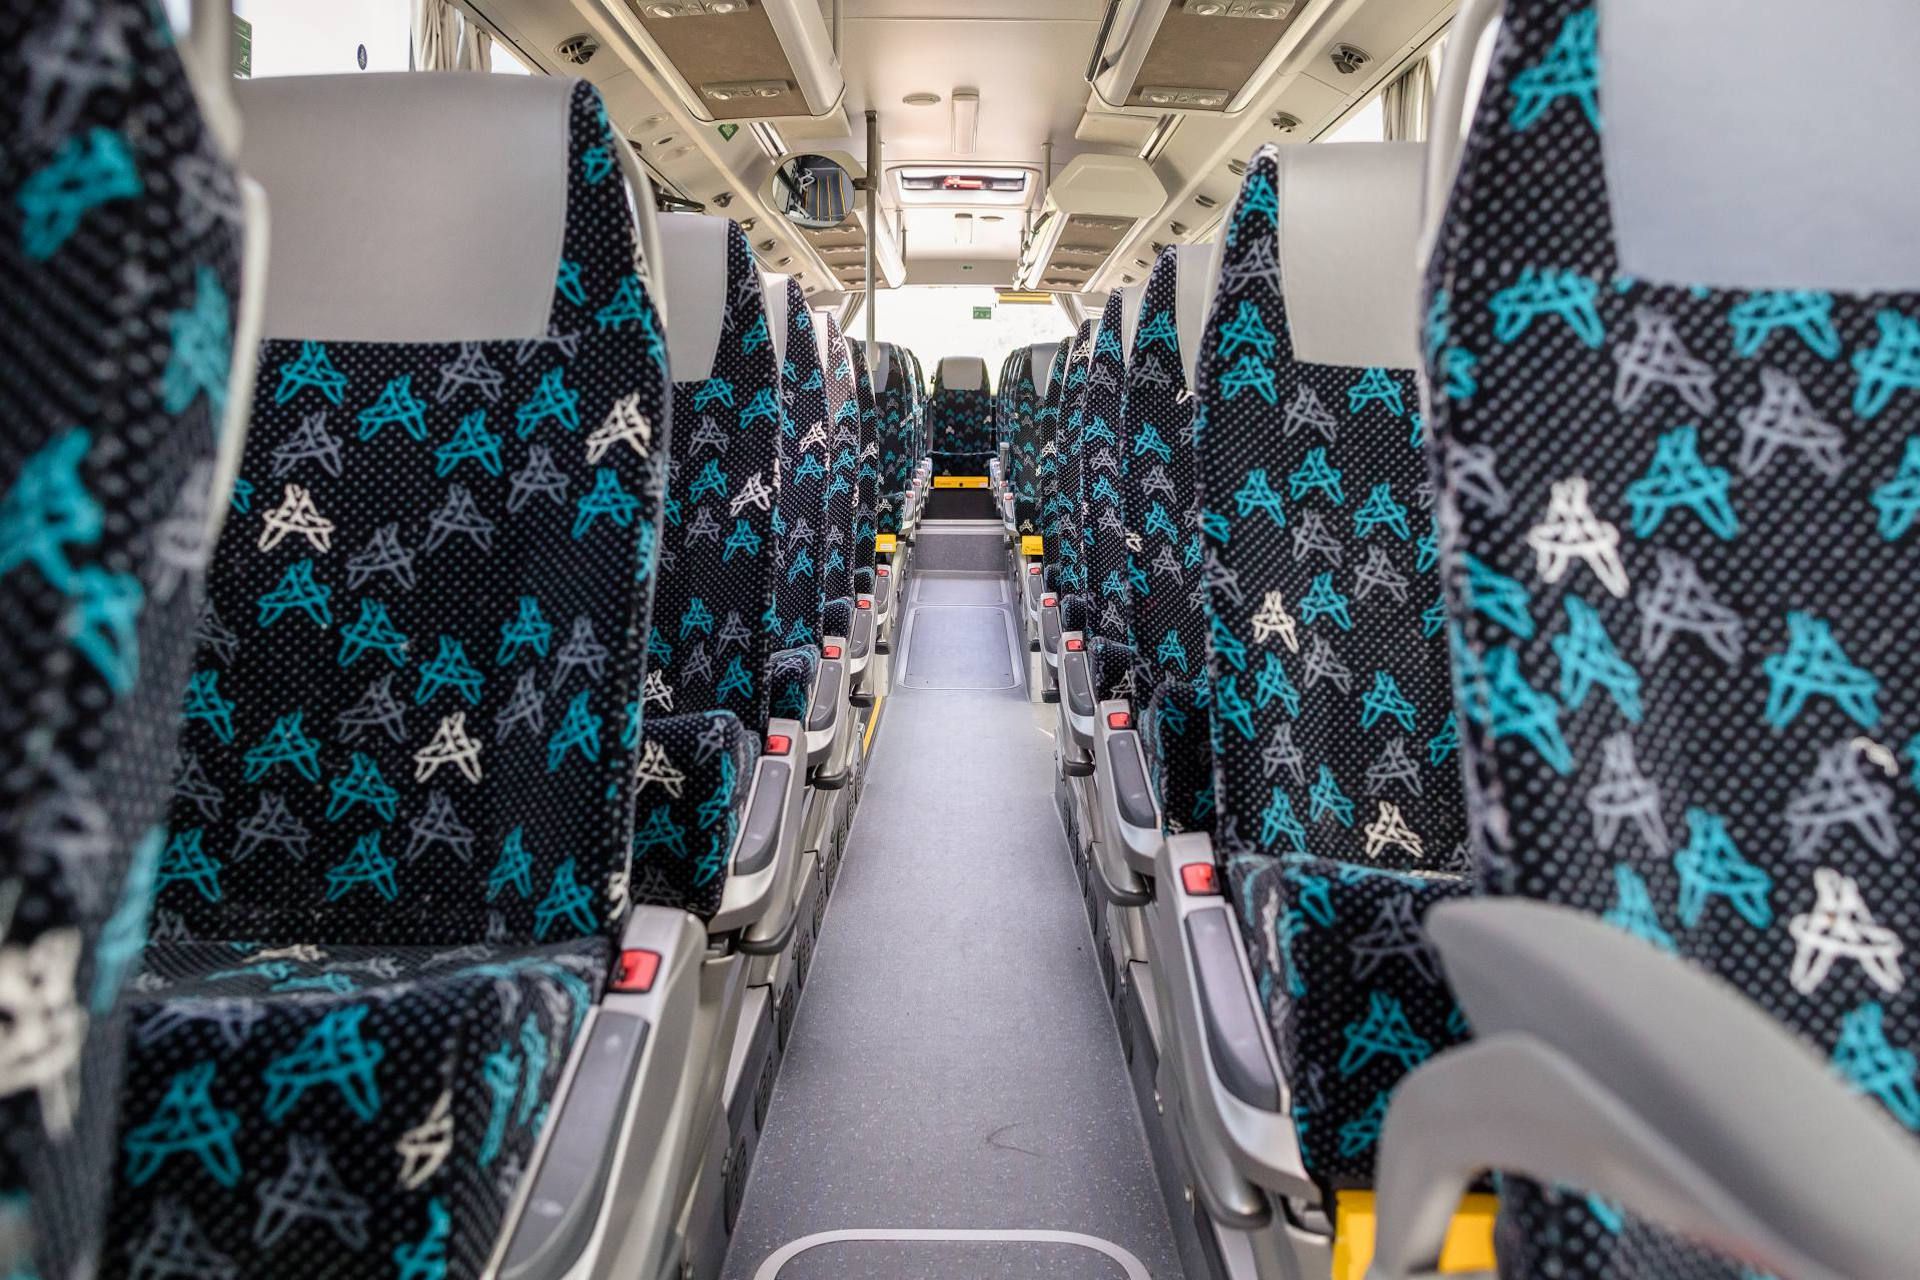 Arriva bus interior seats